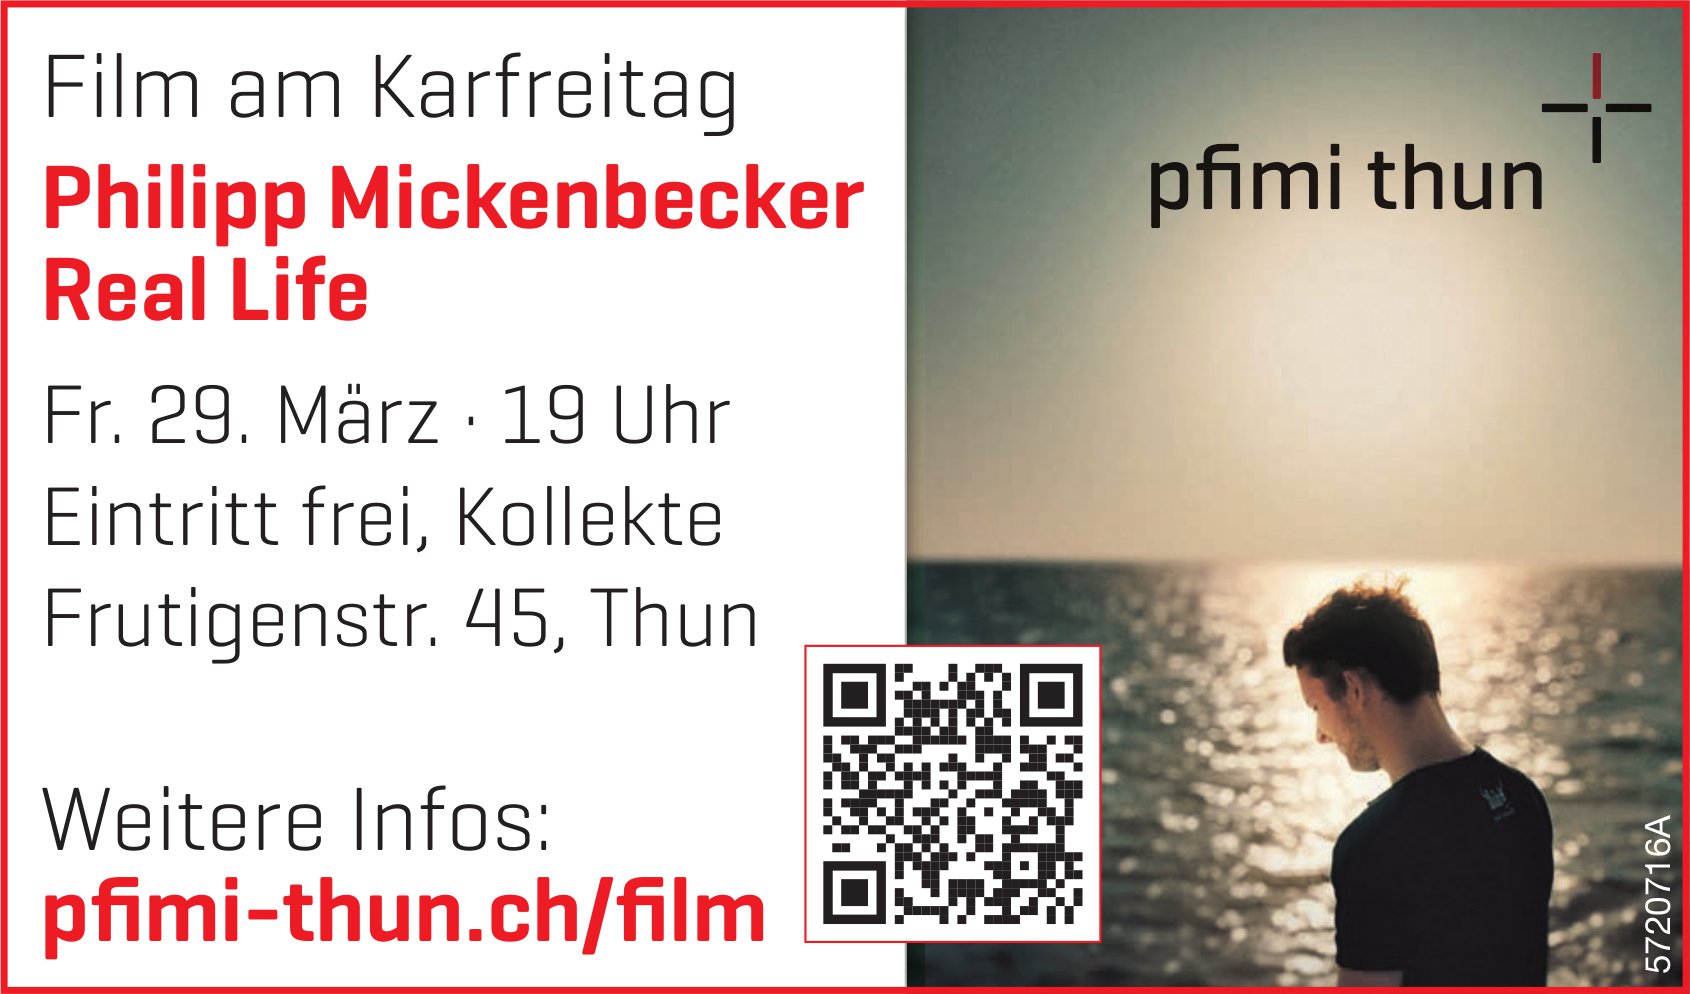 Film Philipp Mickenbecker Real Life, 29. März, Pfimi Thun